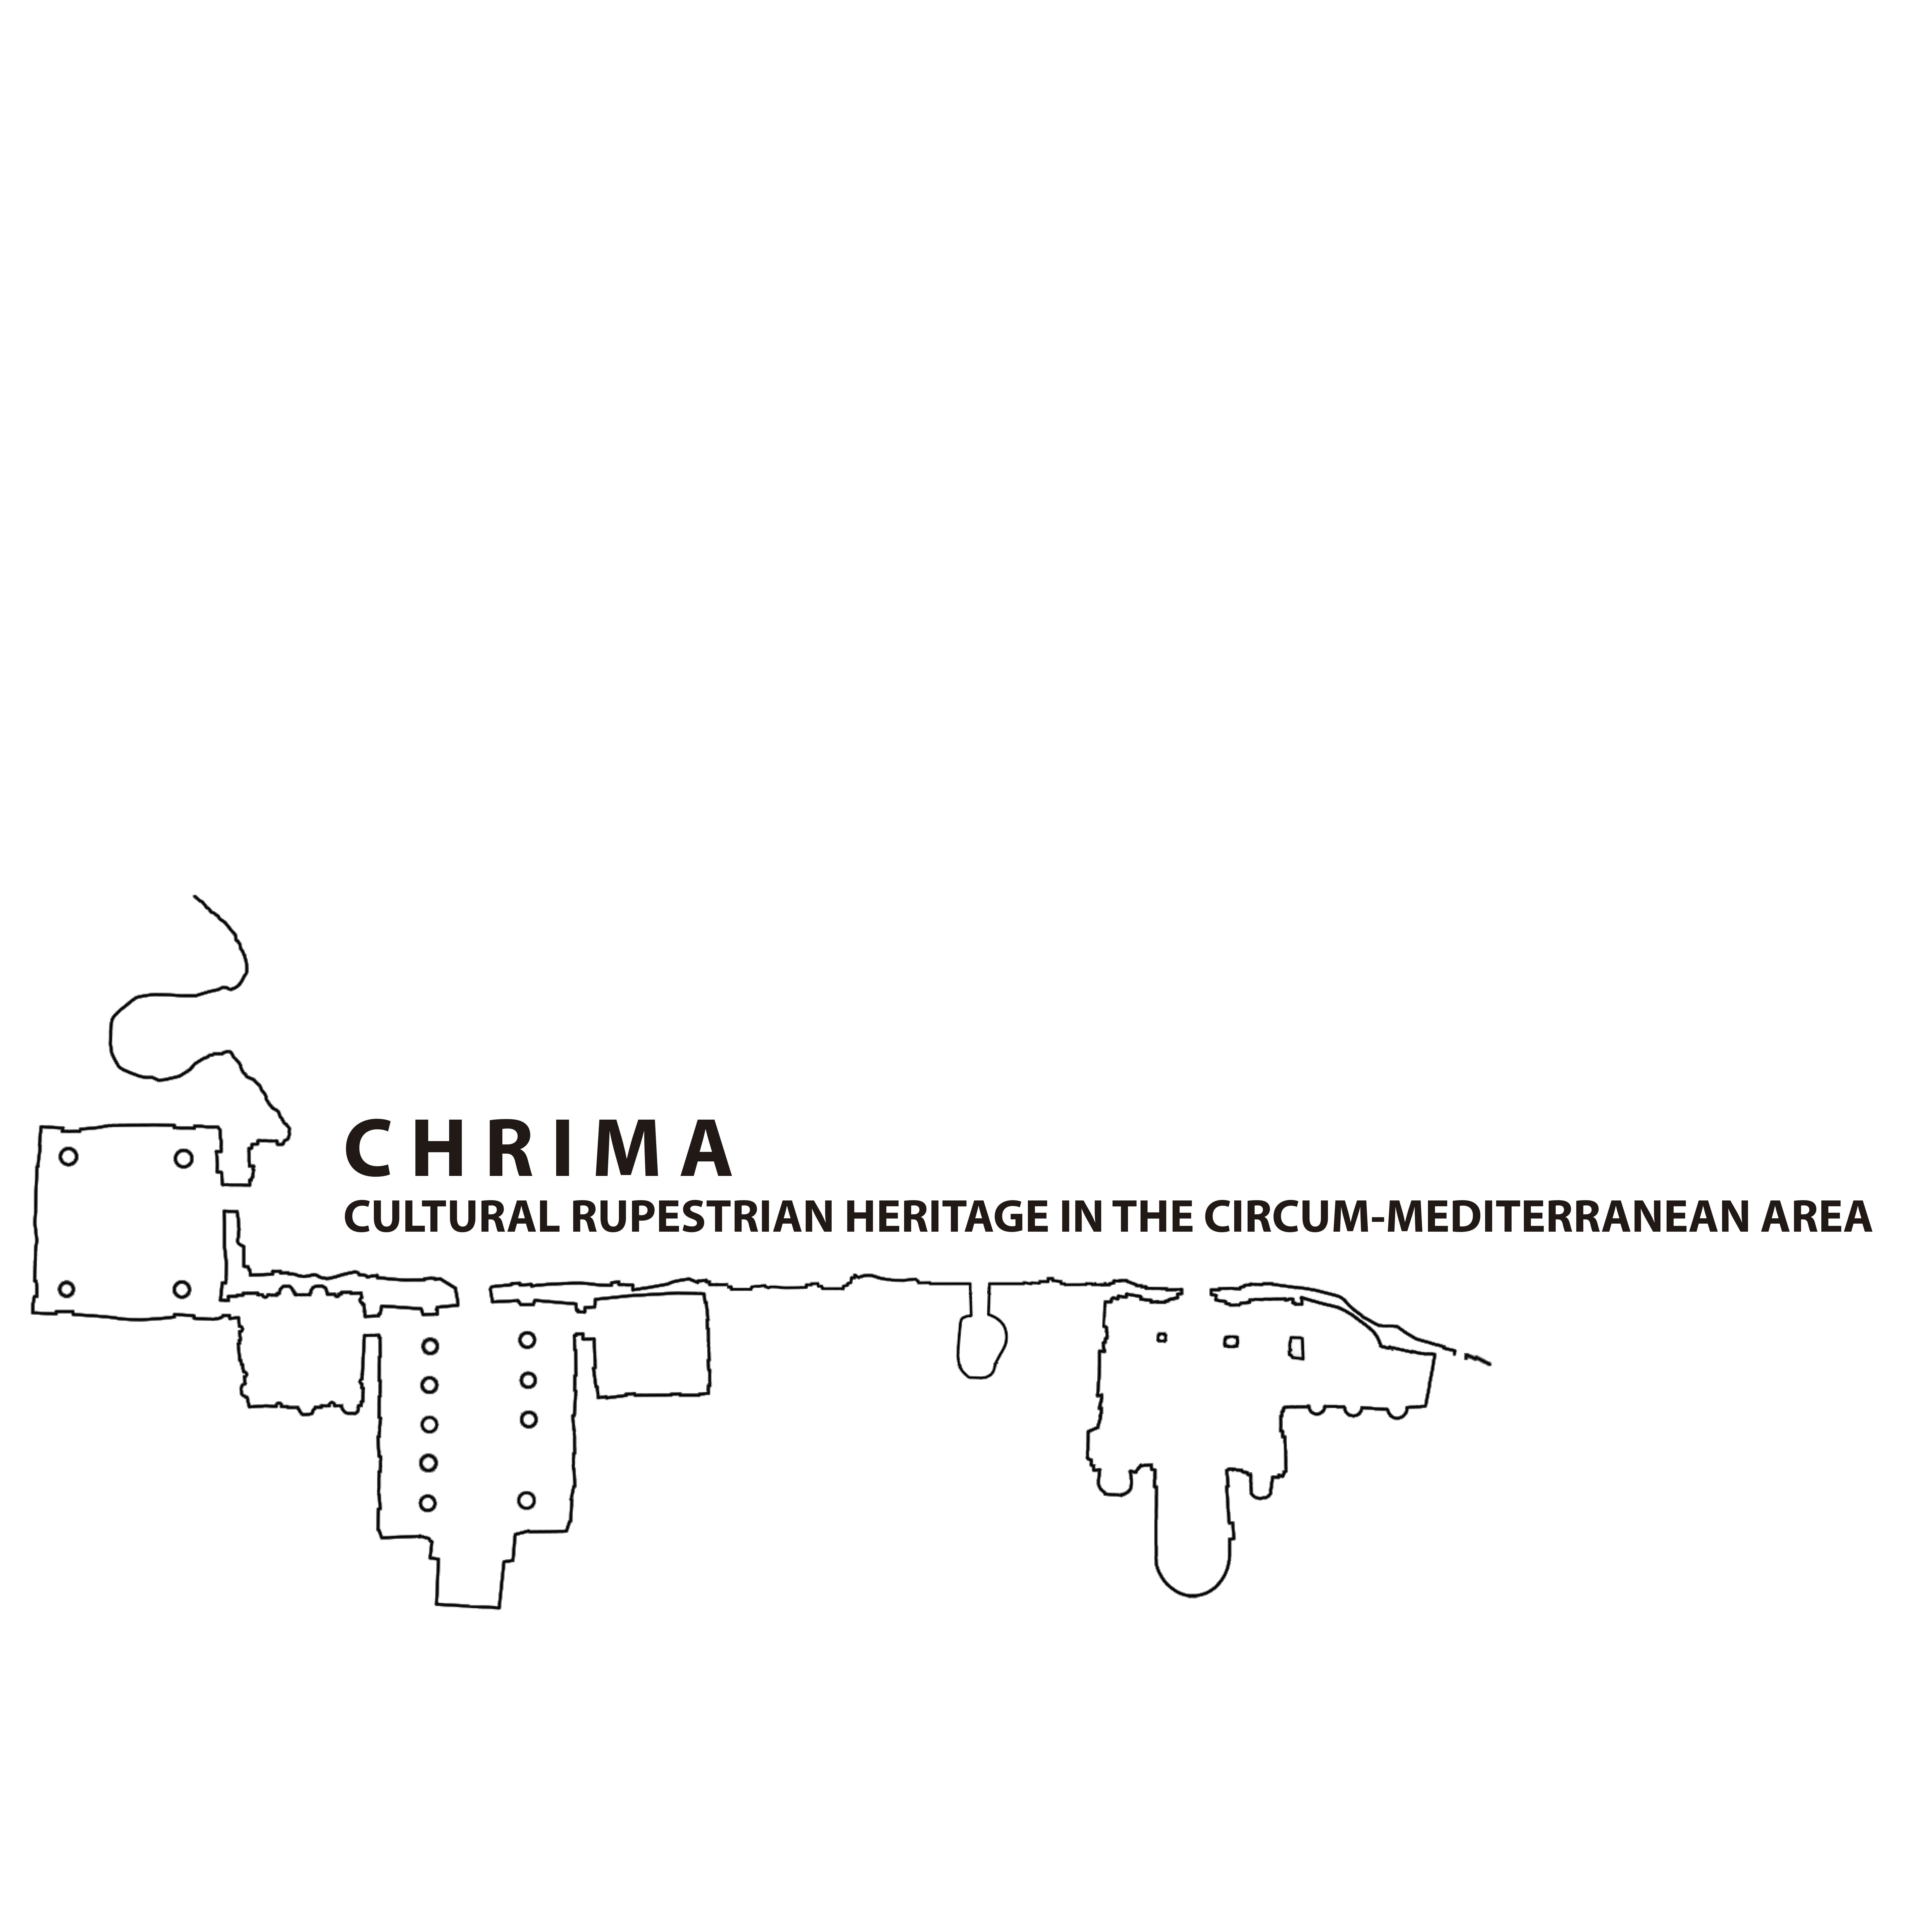 CHRIMA CULTURAL RUPESTRIAN HERITAGE IN THE CIRCUM-MEDIRERRANEAN AREA